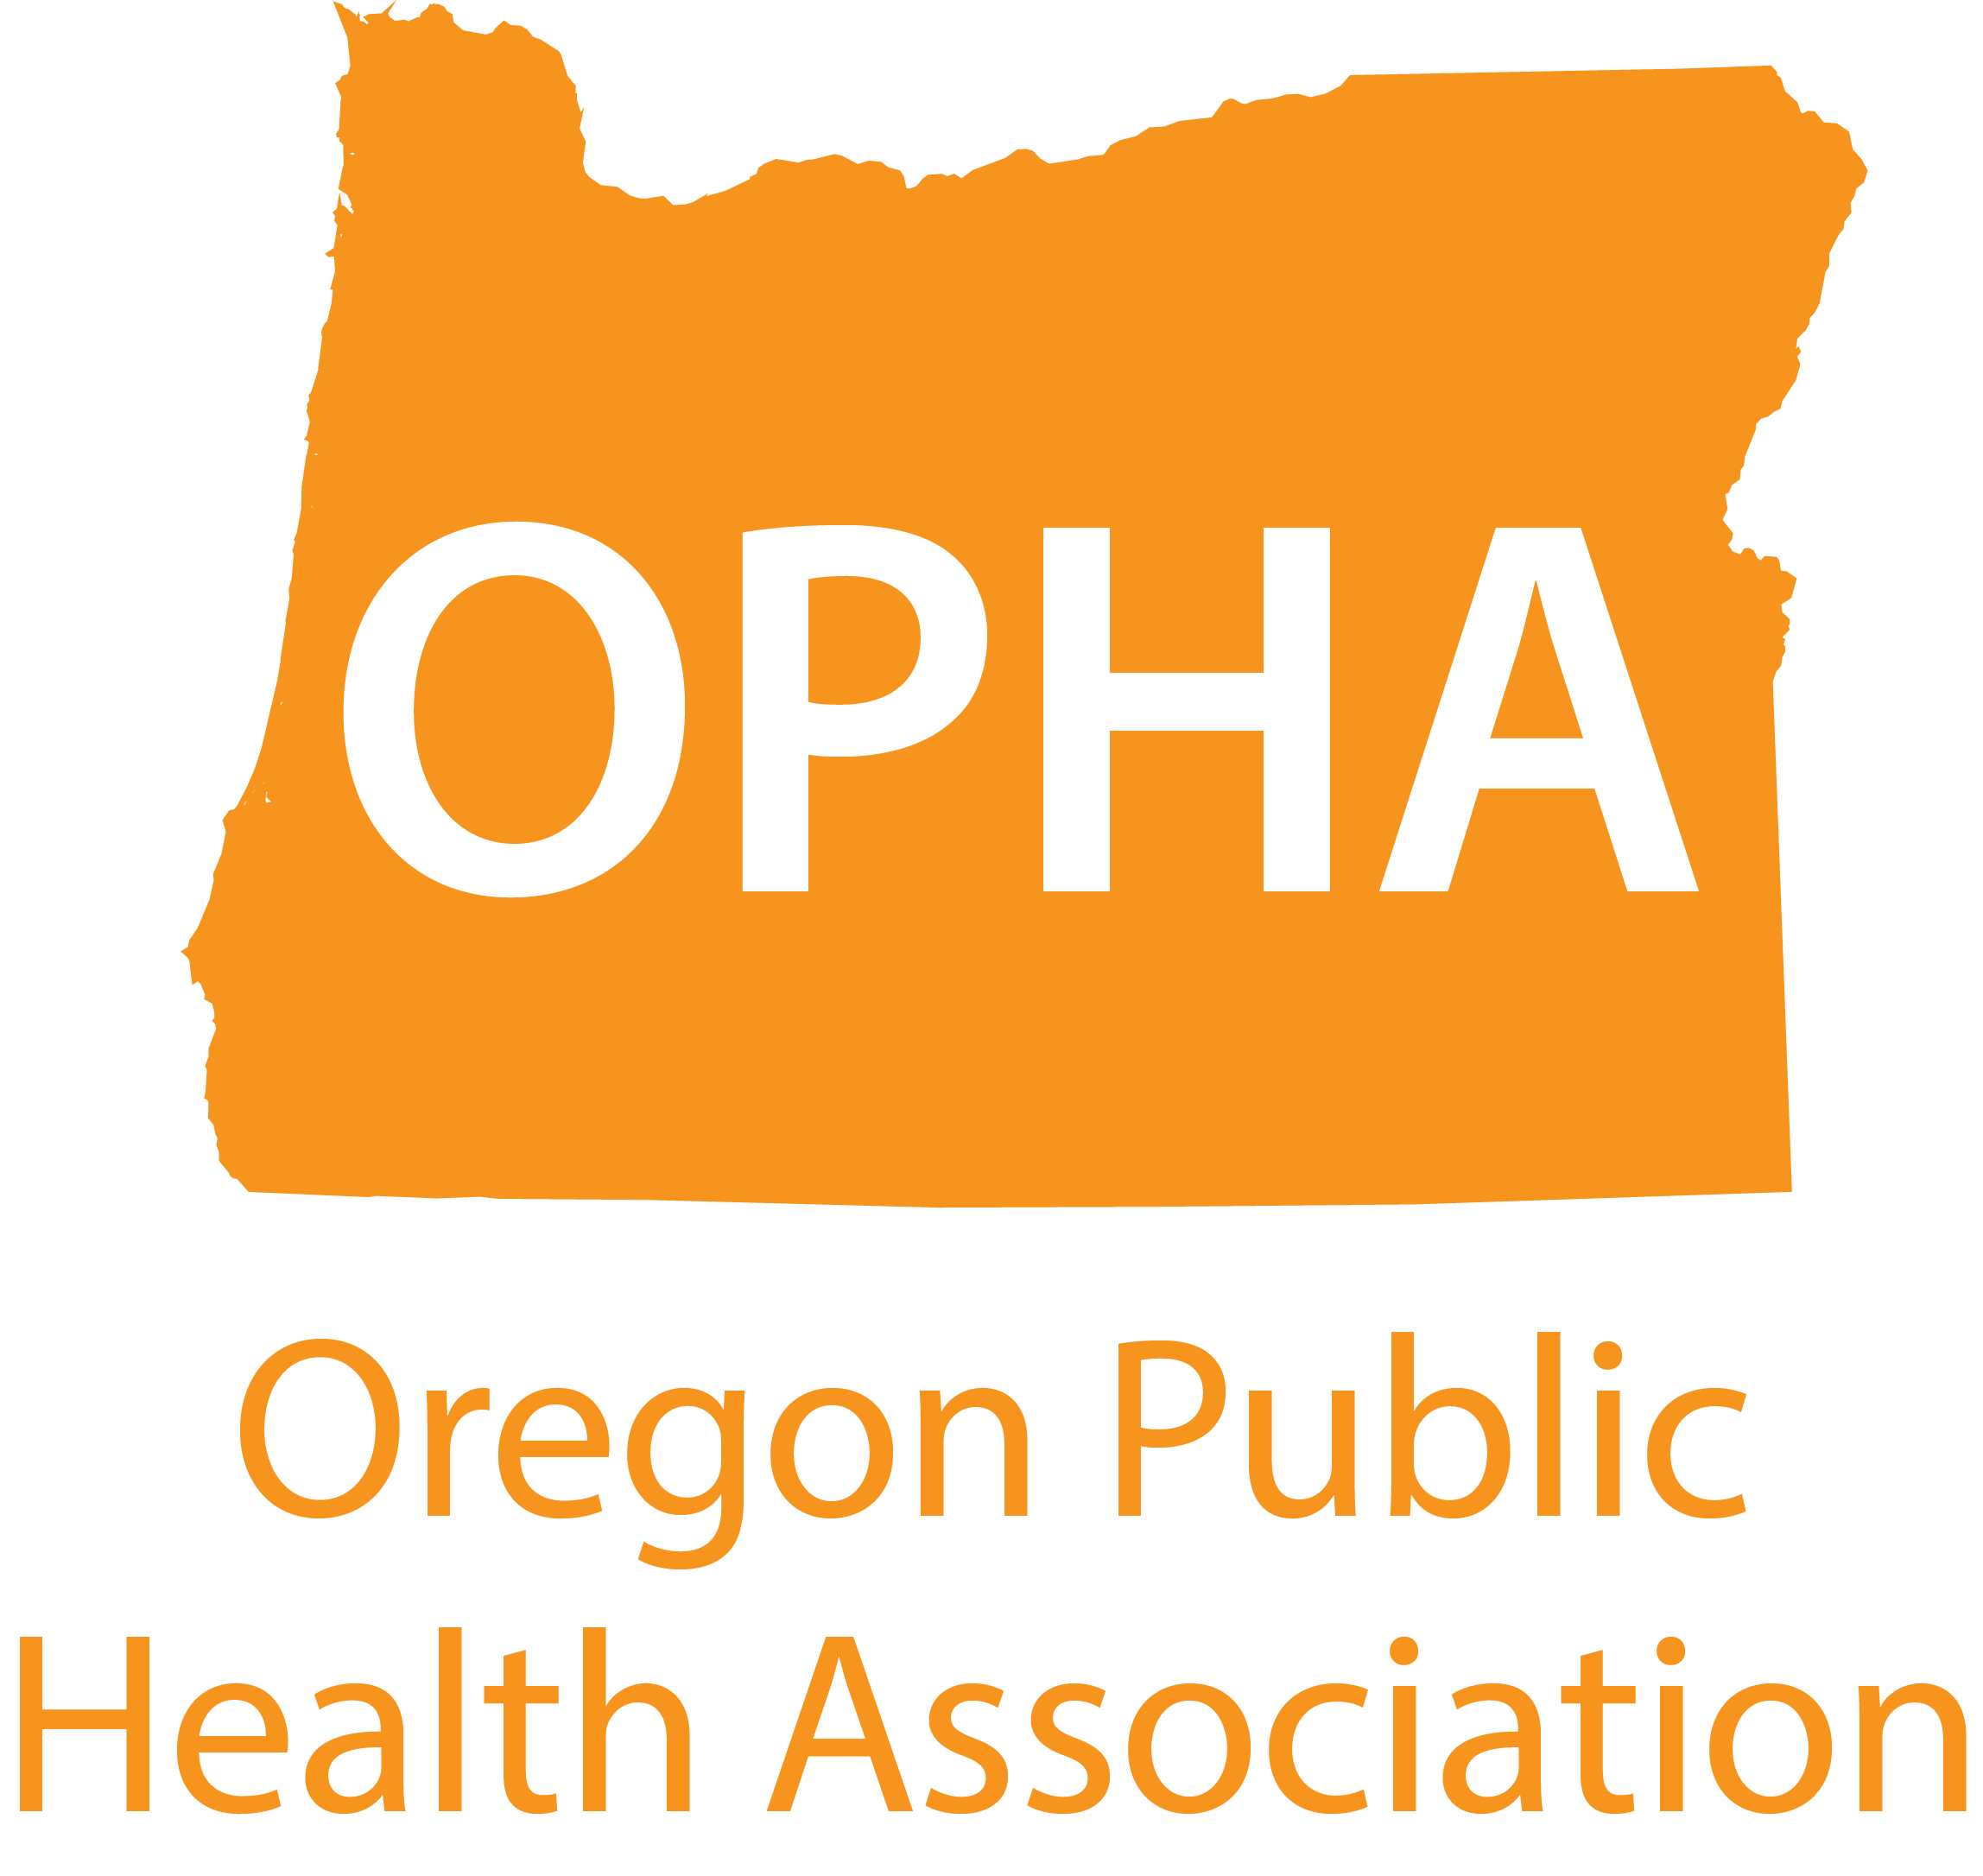 Oregon Public Health Association